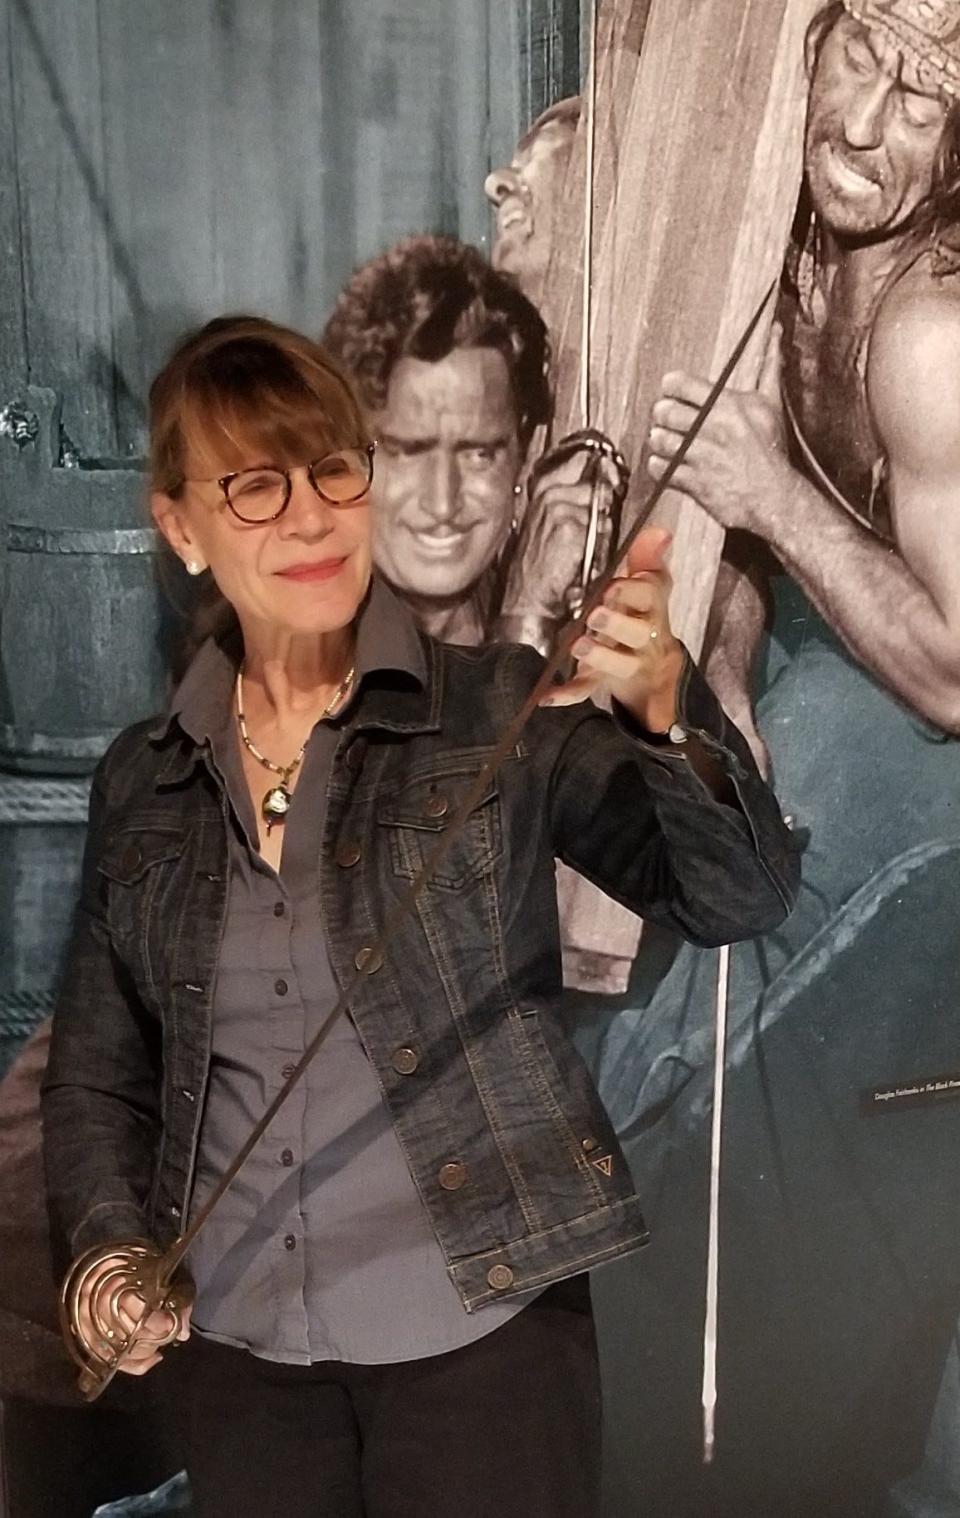 Exhibit designer, Elizabeth Skrabonja holds one of Douglas Fairbanks' swords.